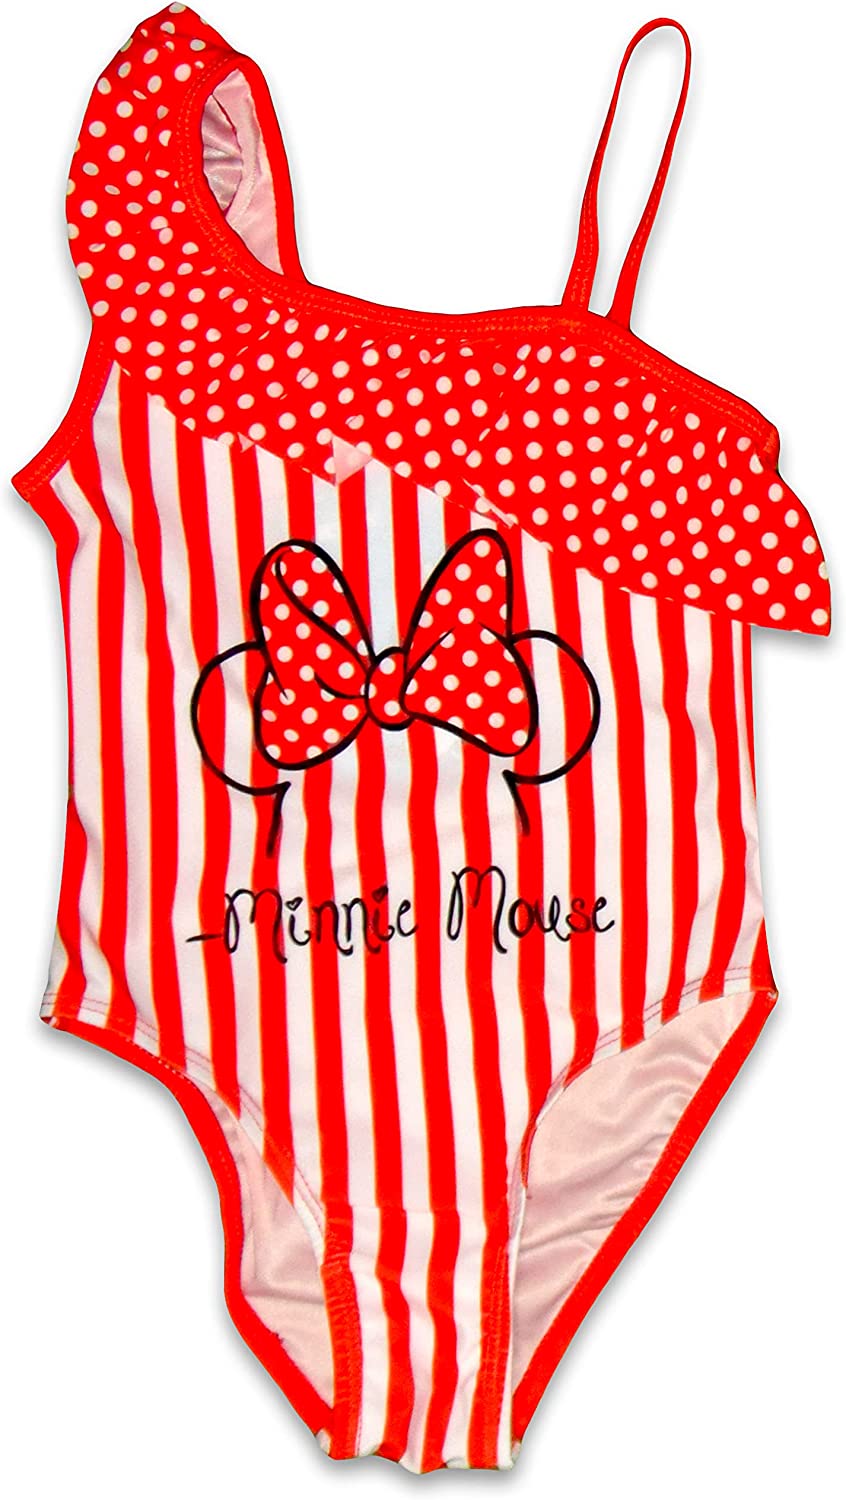 Disney Minnie Mouse Girls Kids Swimwear Beachwear